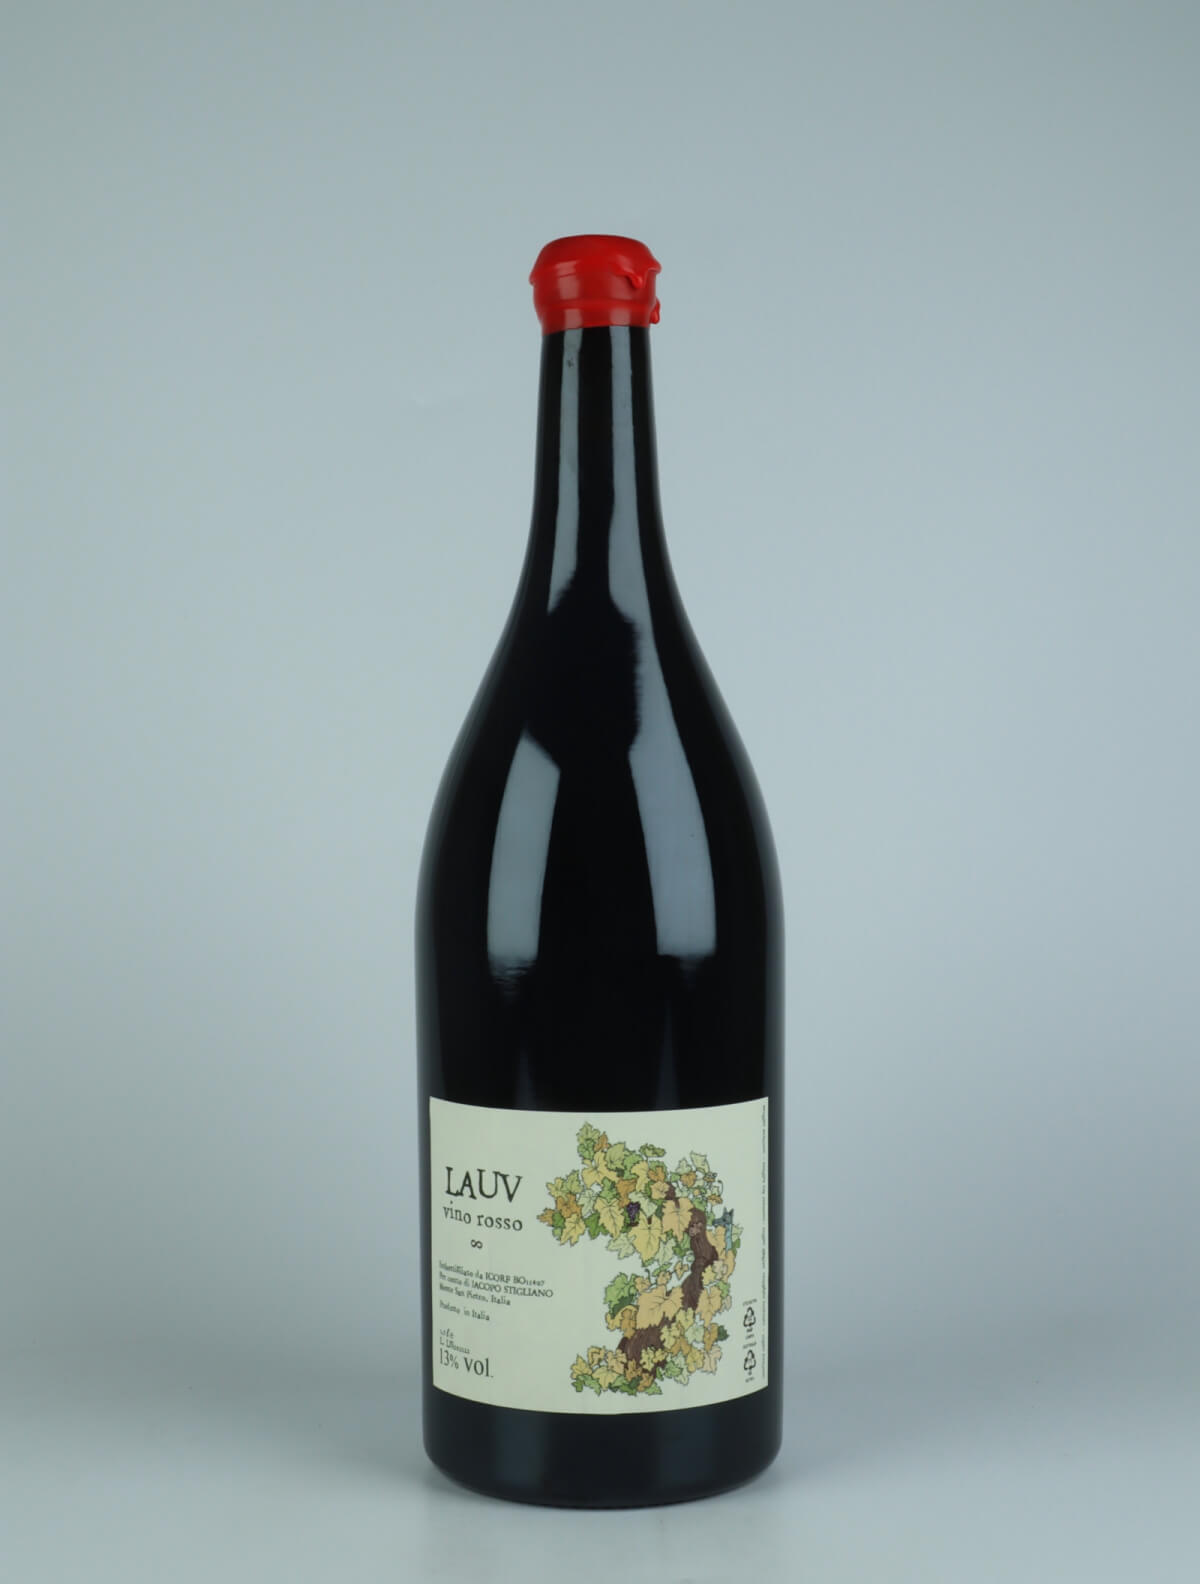 A bottle N.V. Lauv (20/21/22) - Magnum Red wine from Jacopo Stigliano, Emilia-Romagna in Italy